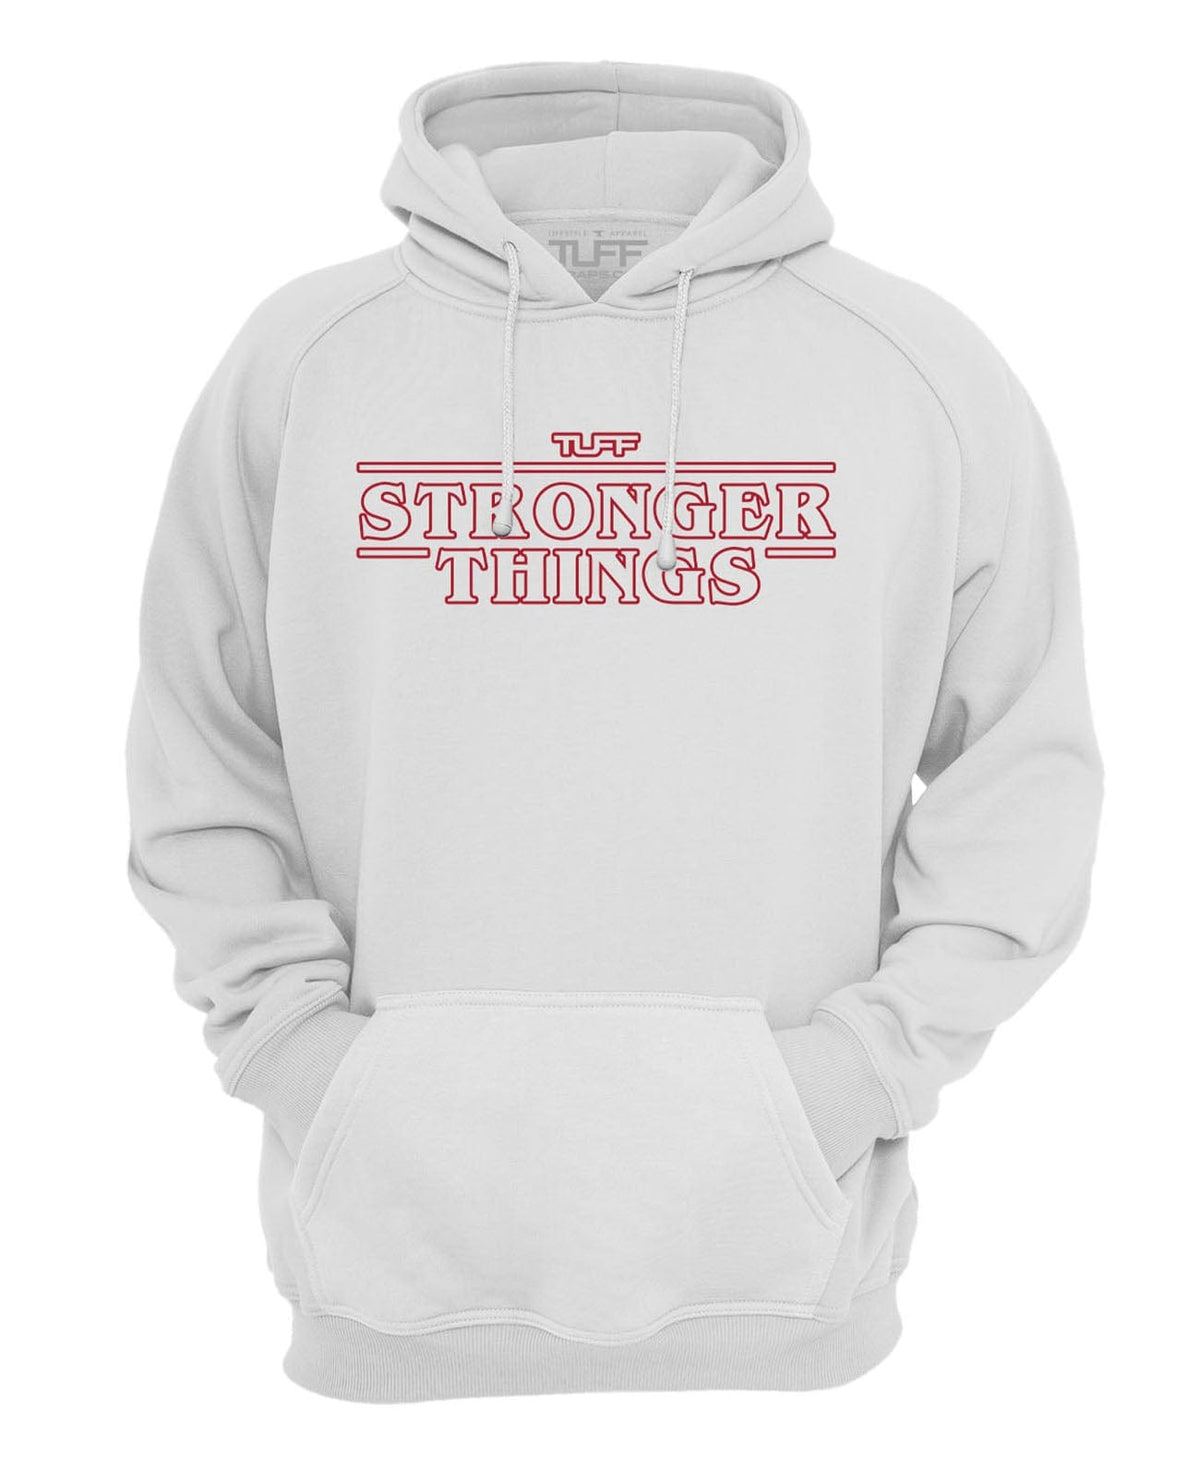 Stronger Things Hooded Sweatshirt XS / White TuffWraps.com